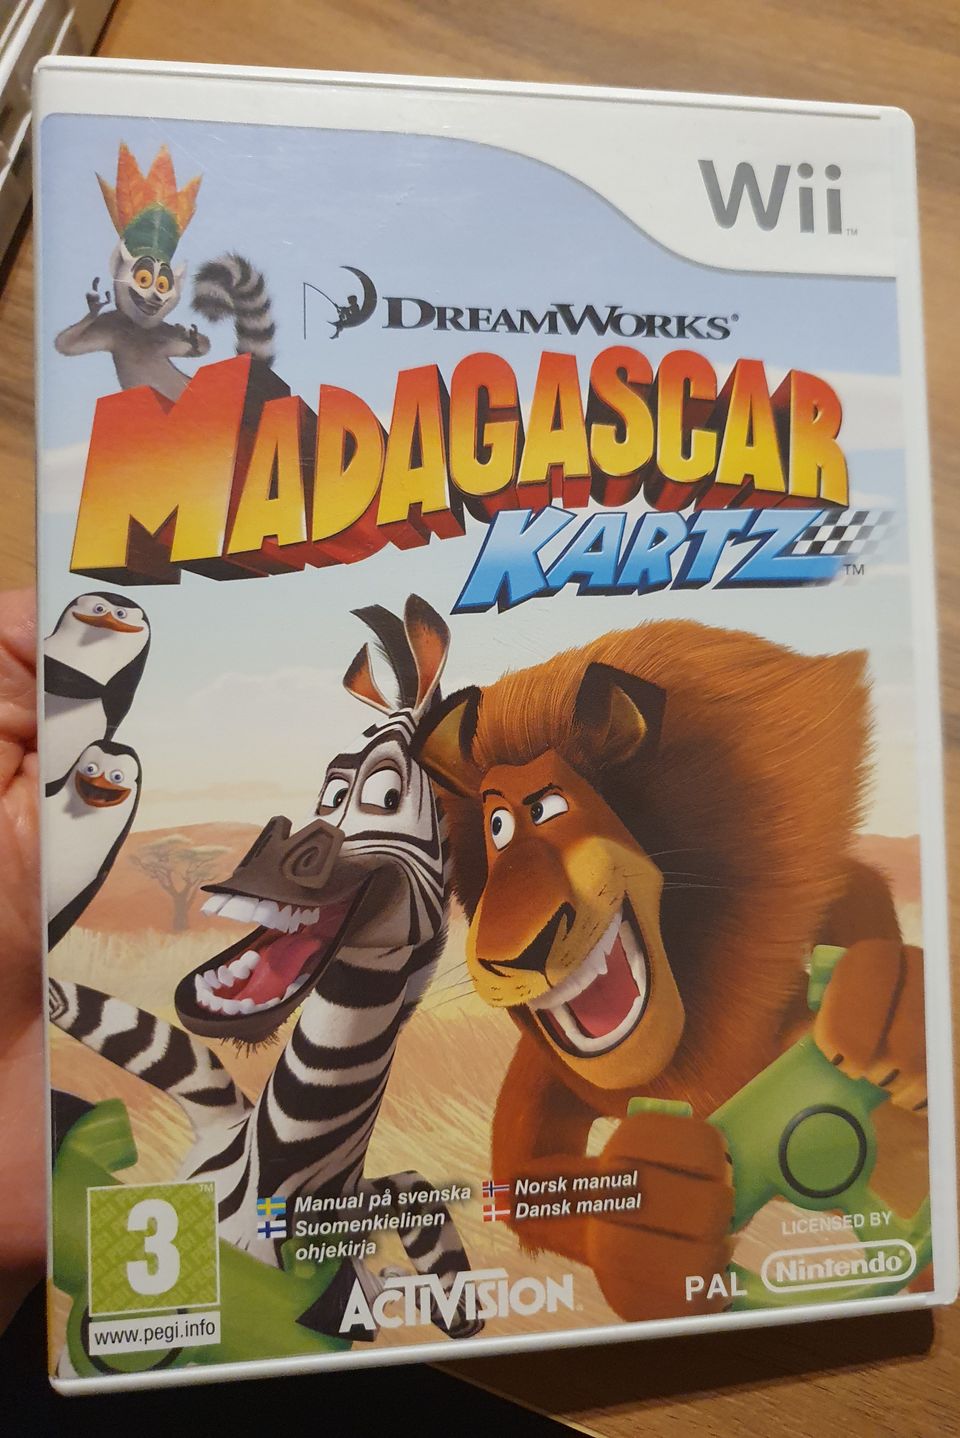 Wii Madagascar kartz peli ja rattiaihio